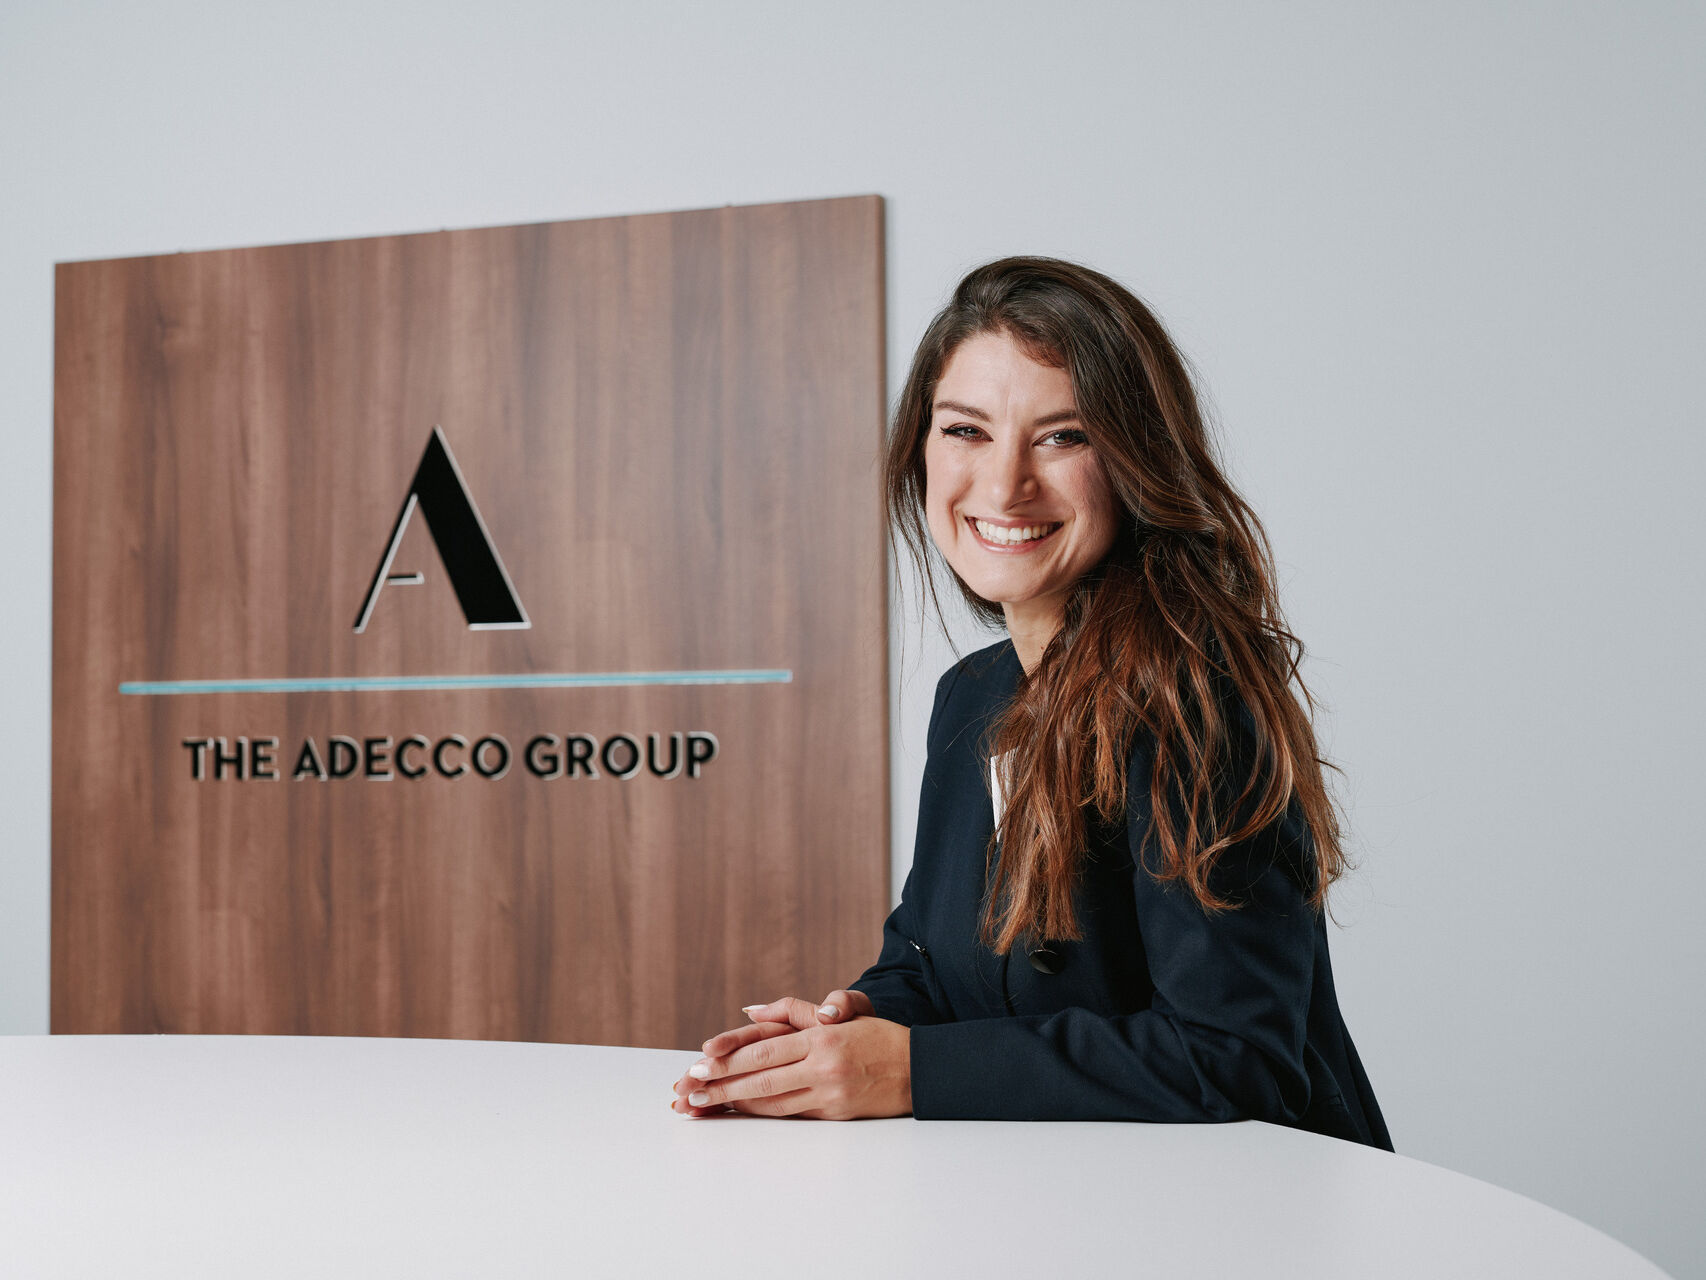 Virginia Stagni: Adecco Group